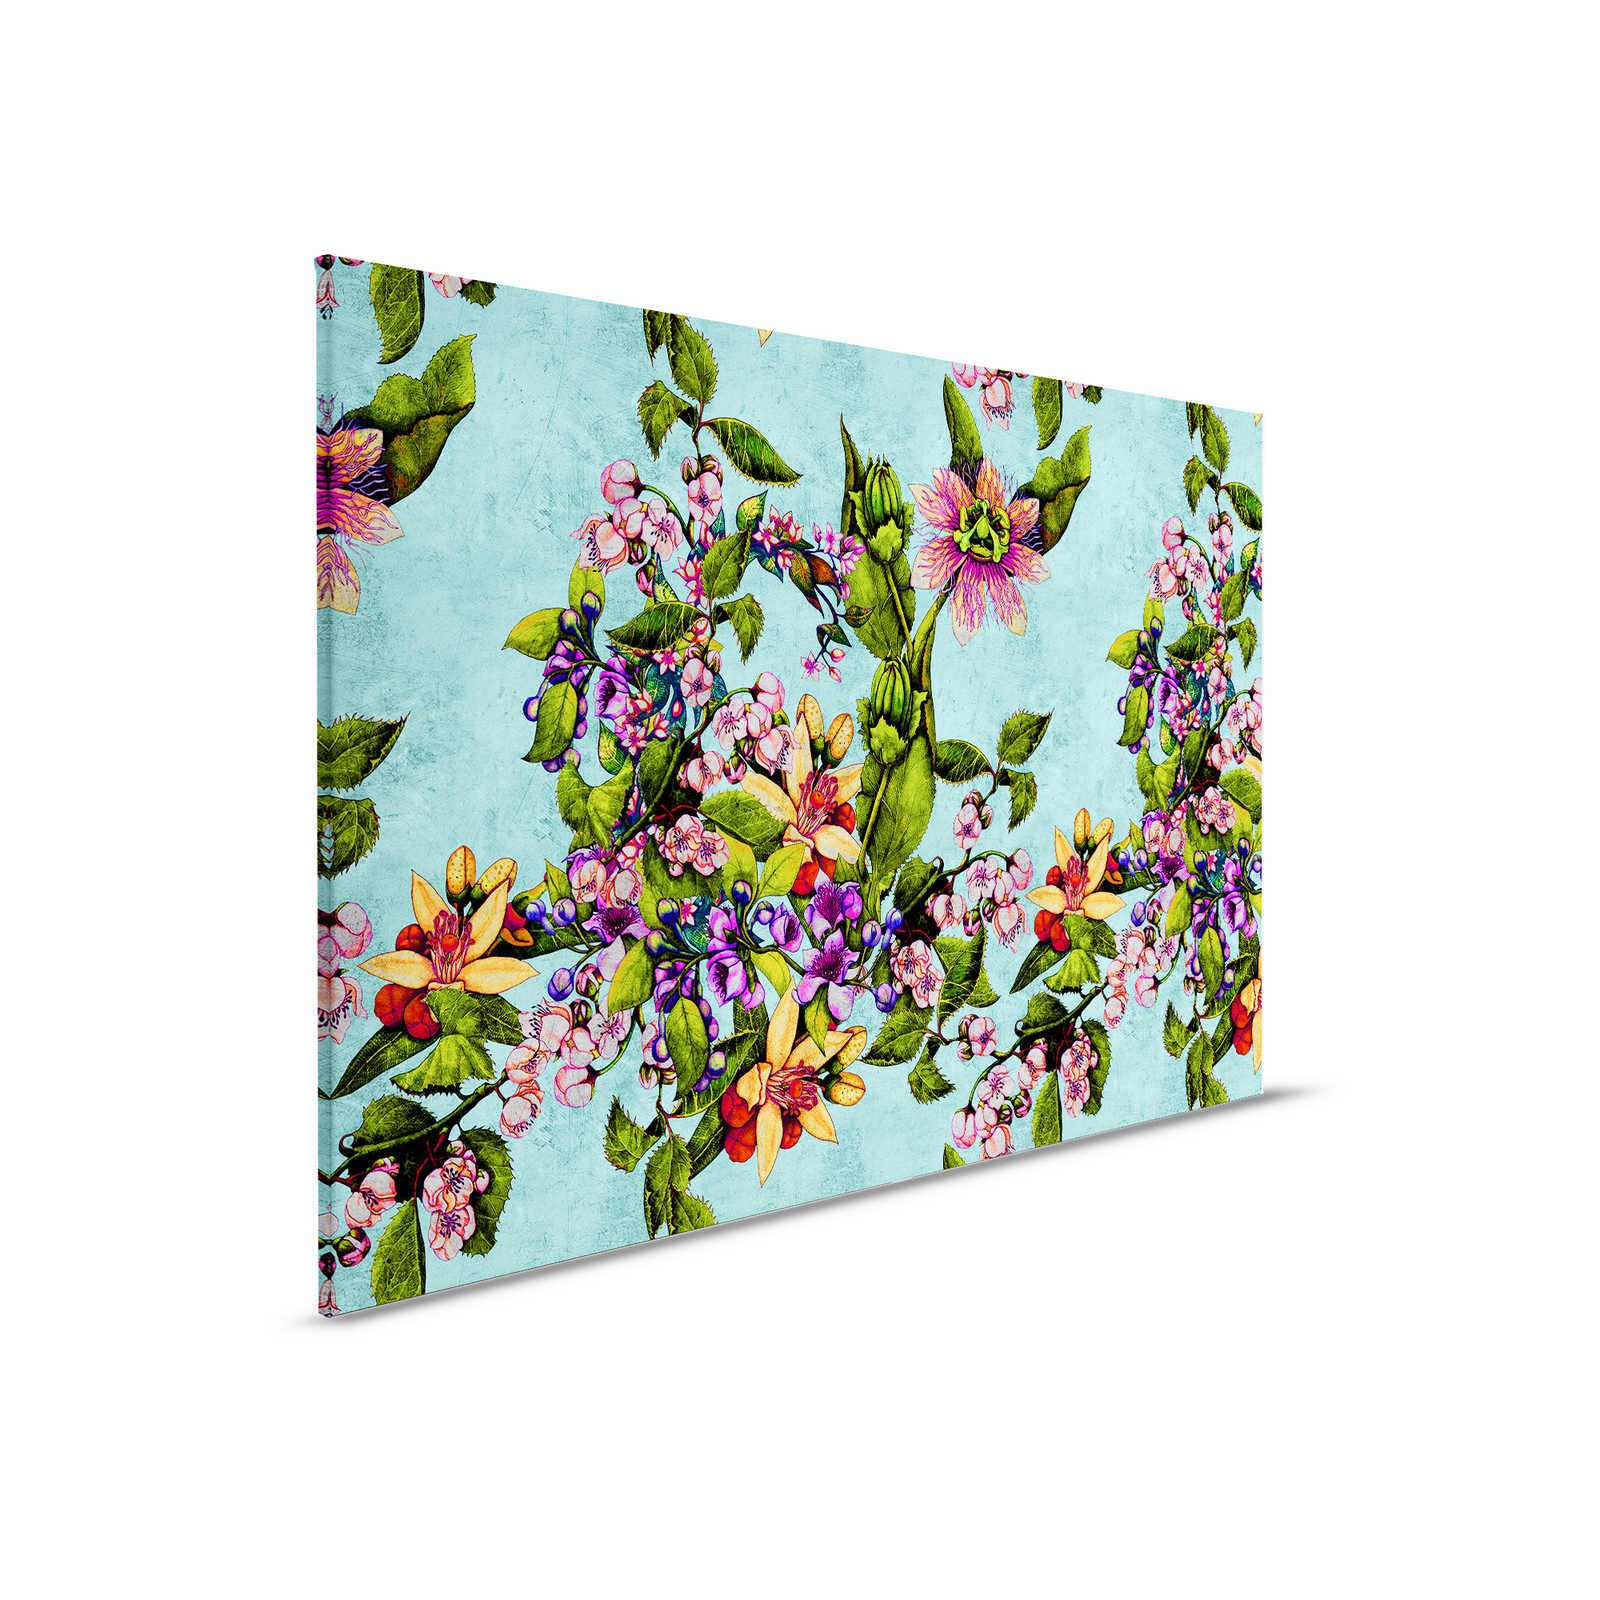 Tropical Passion 1 - Quadro su tela con motivi floreali - 0,90 m x 0,60 m
